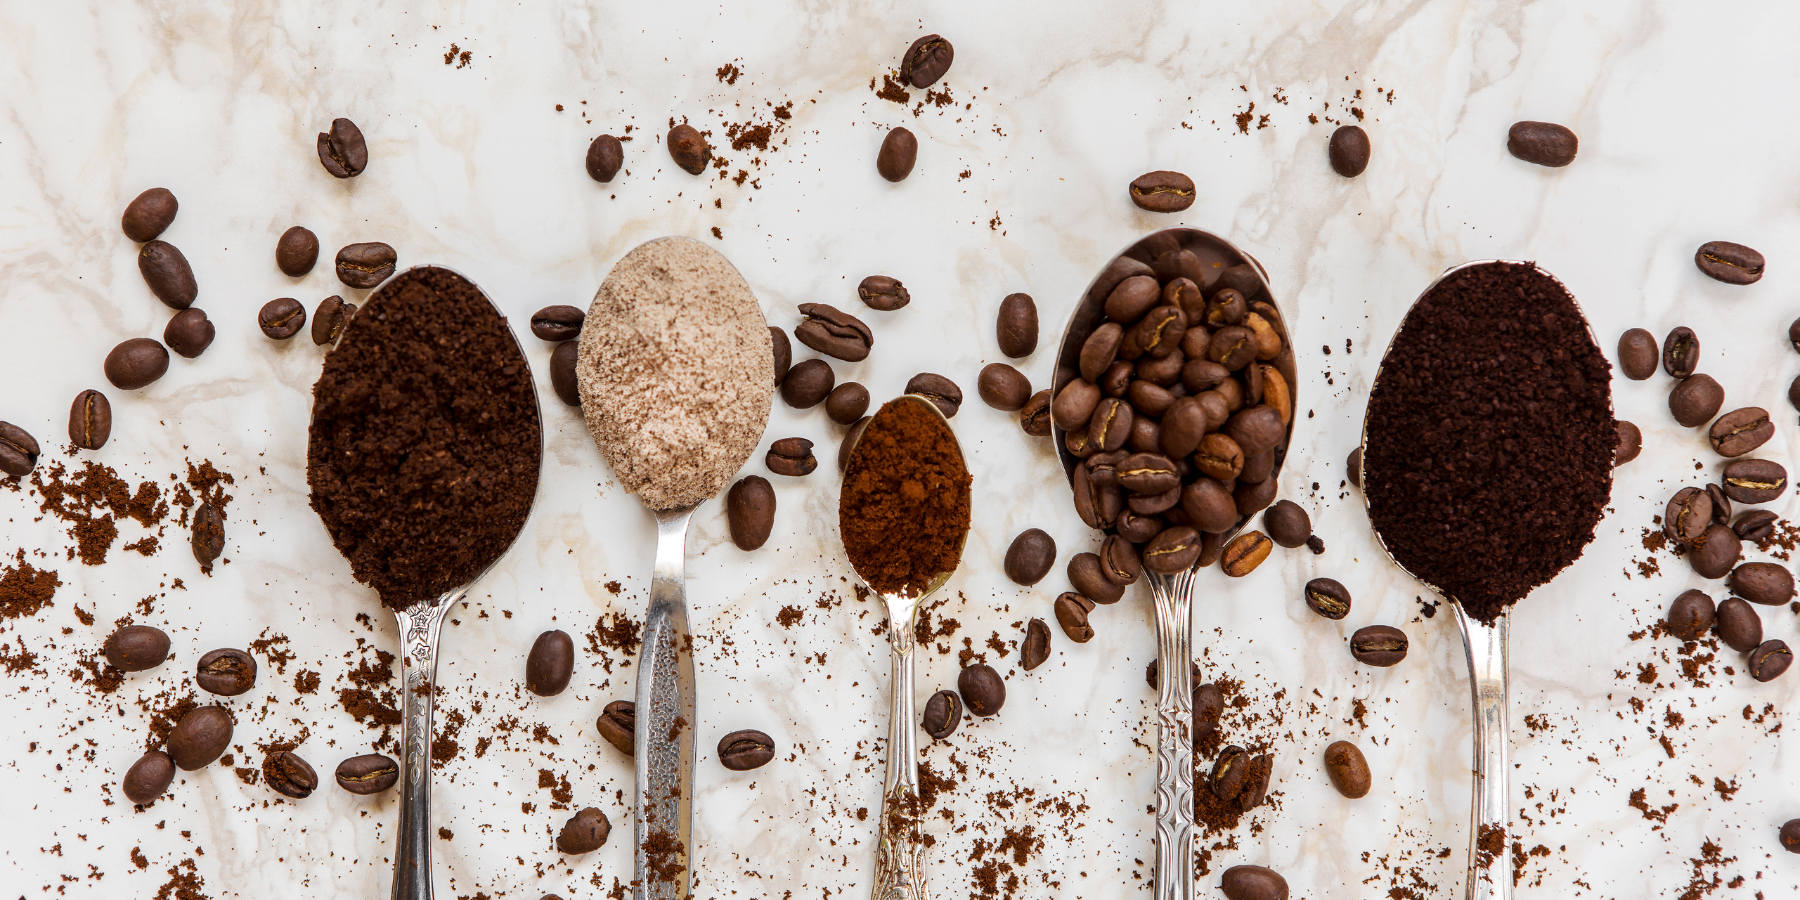 L'OR Espresso Zimbabwe – Coffee, coffee pods, beans & instant coffee